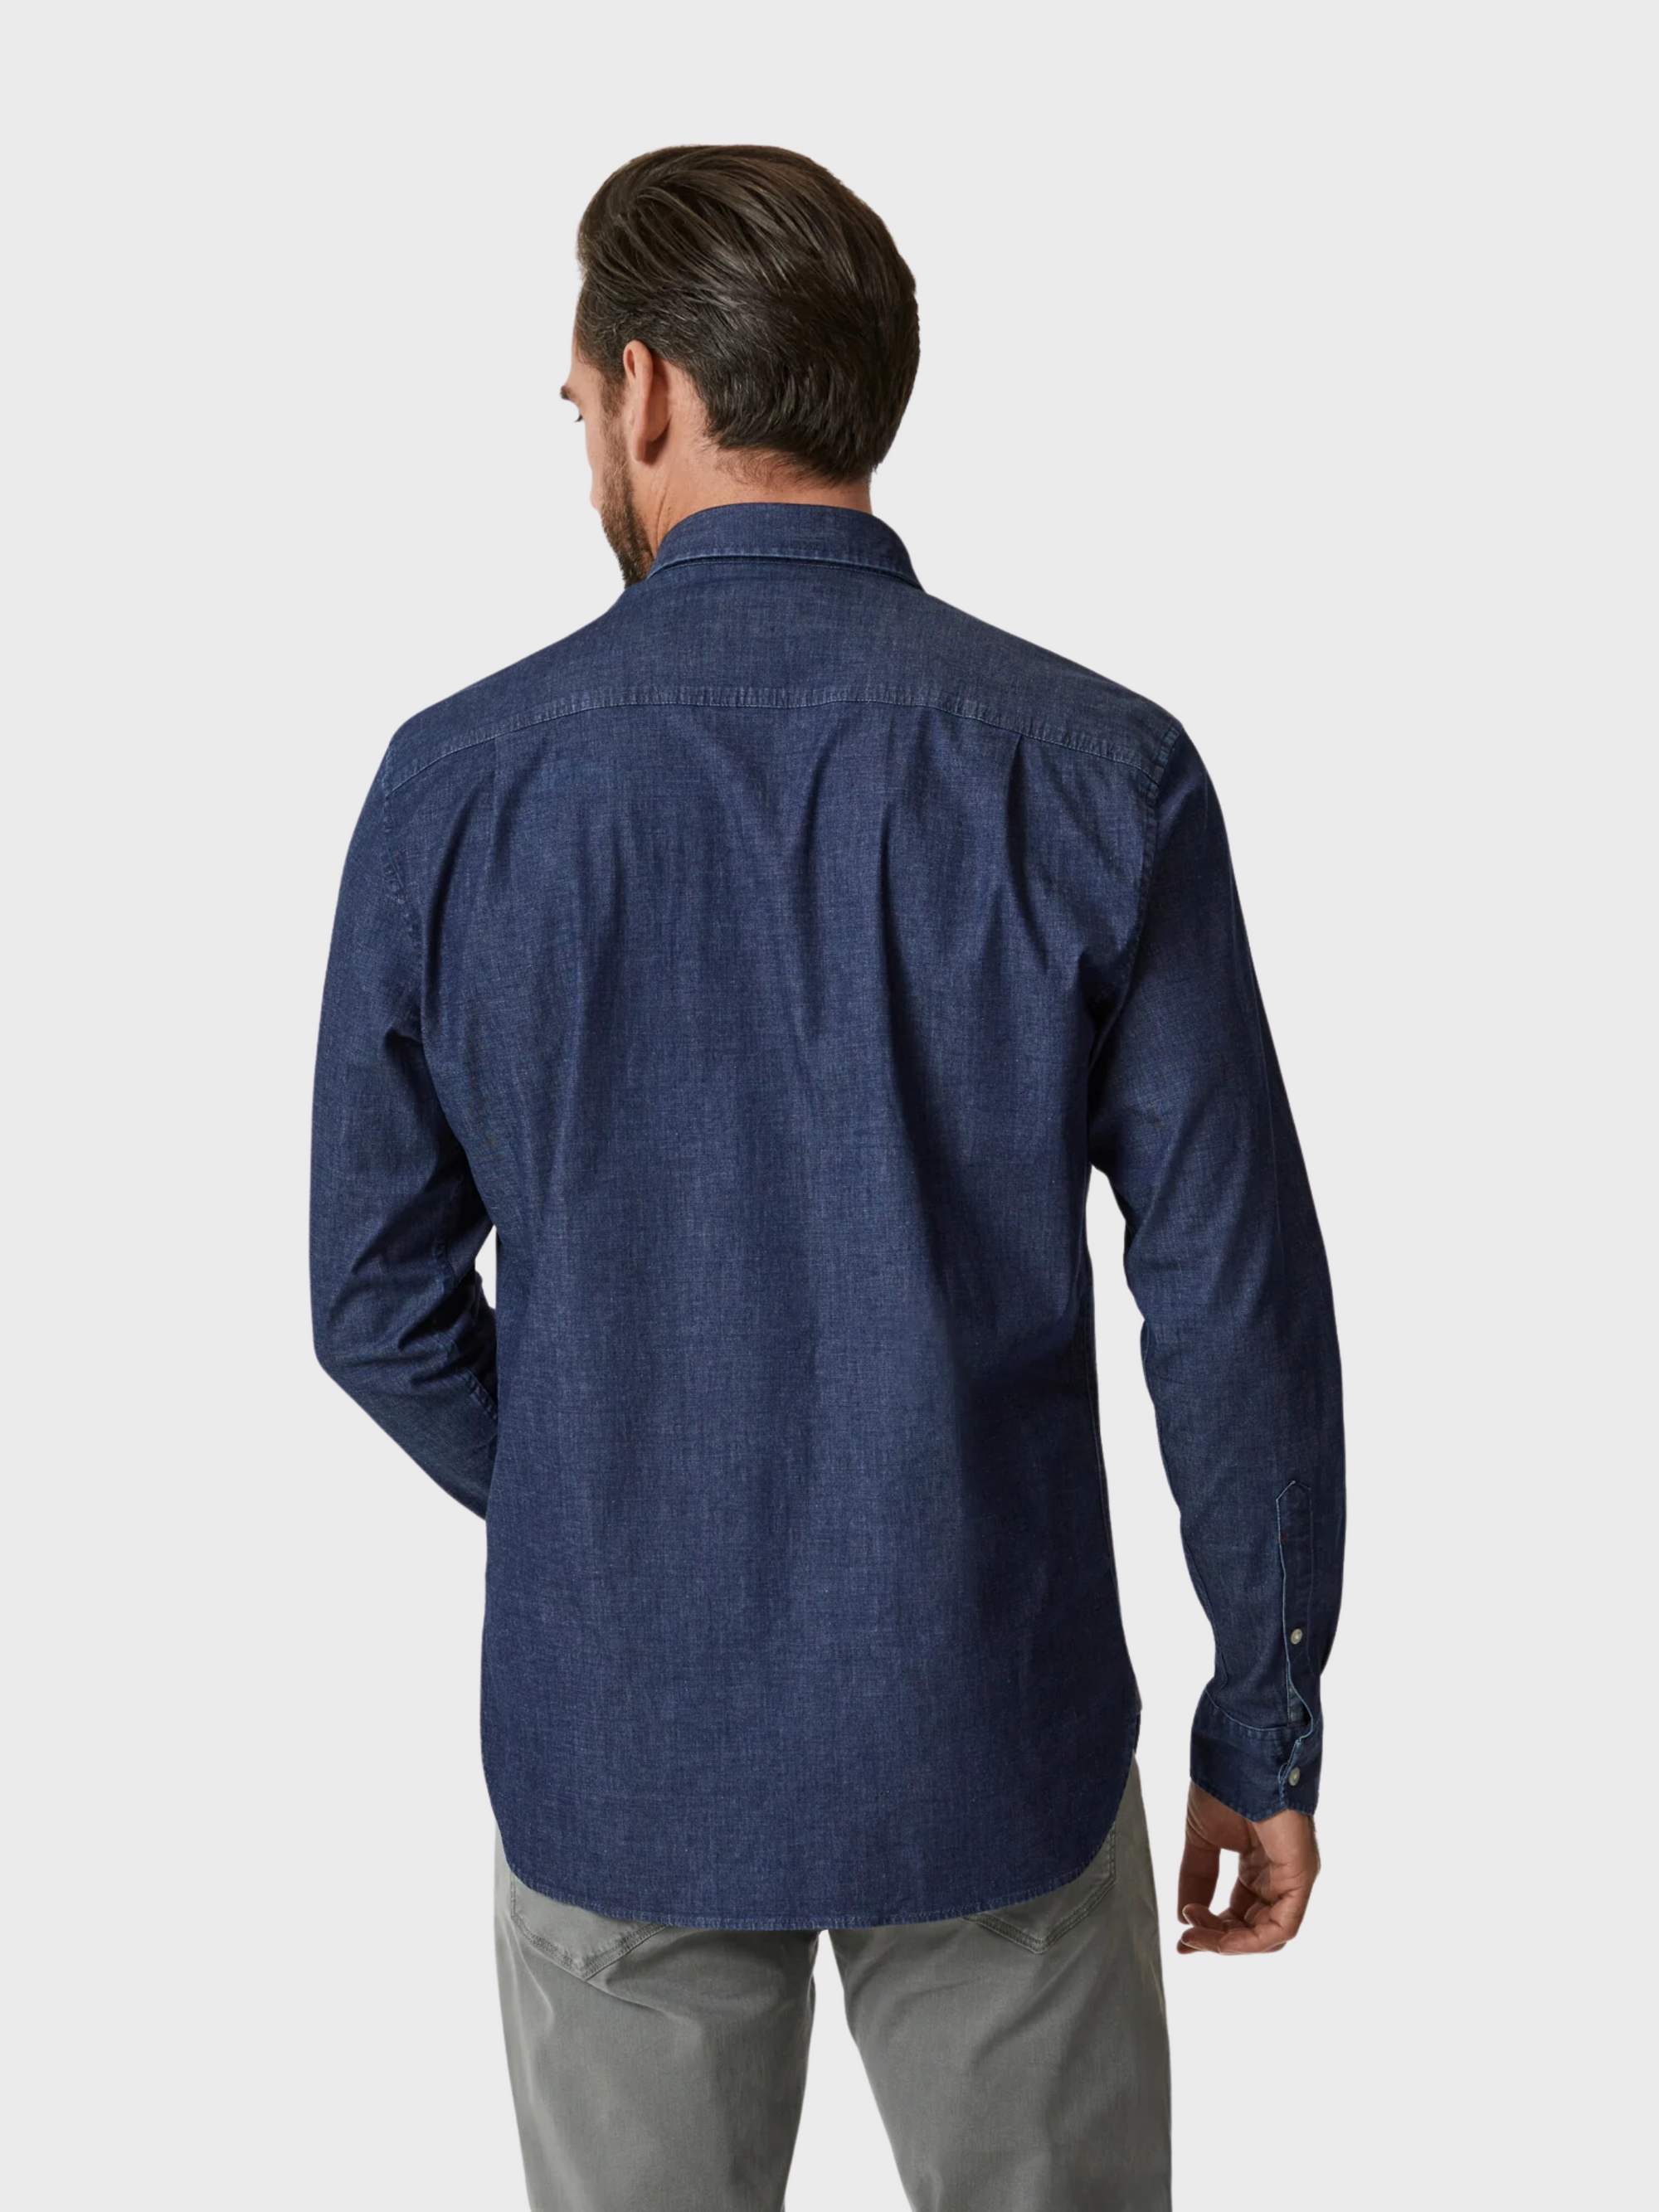 34 Heritage Shirt Denim Med Blue-Men's Shirts-Brooklyn-Vancouver-Yaletown-Canada